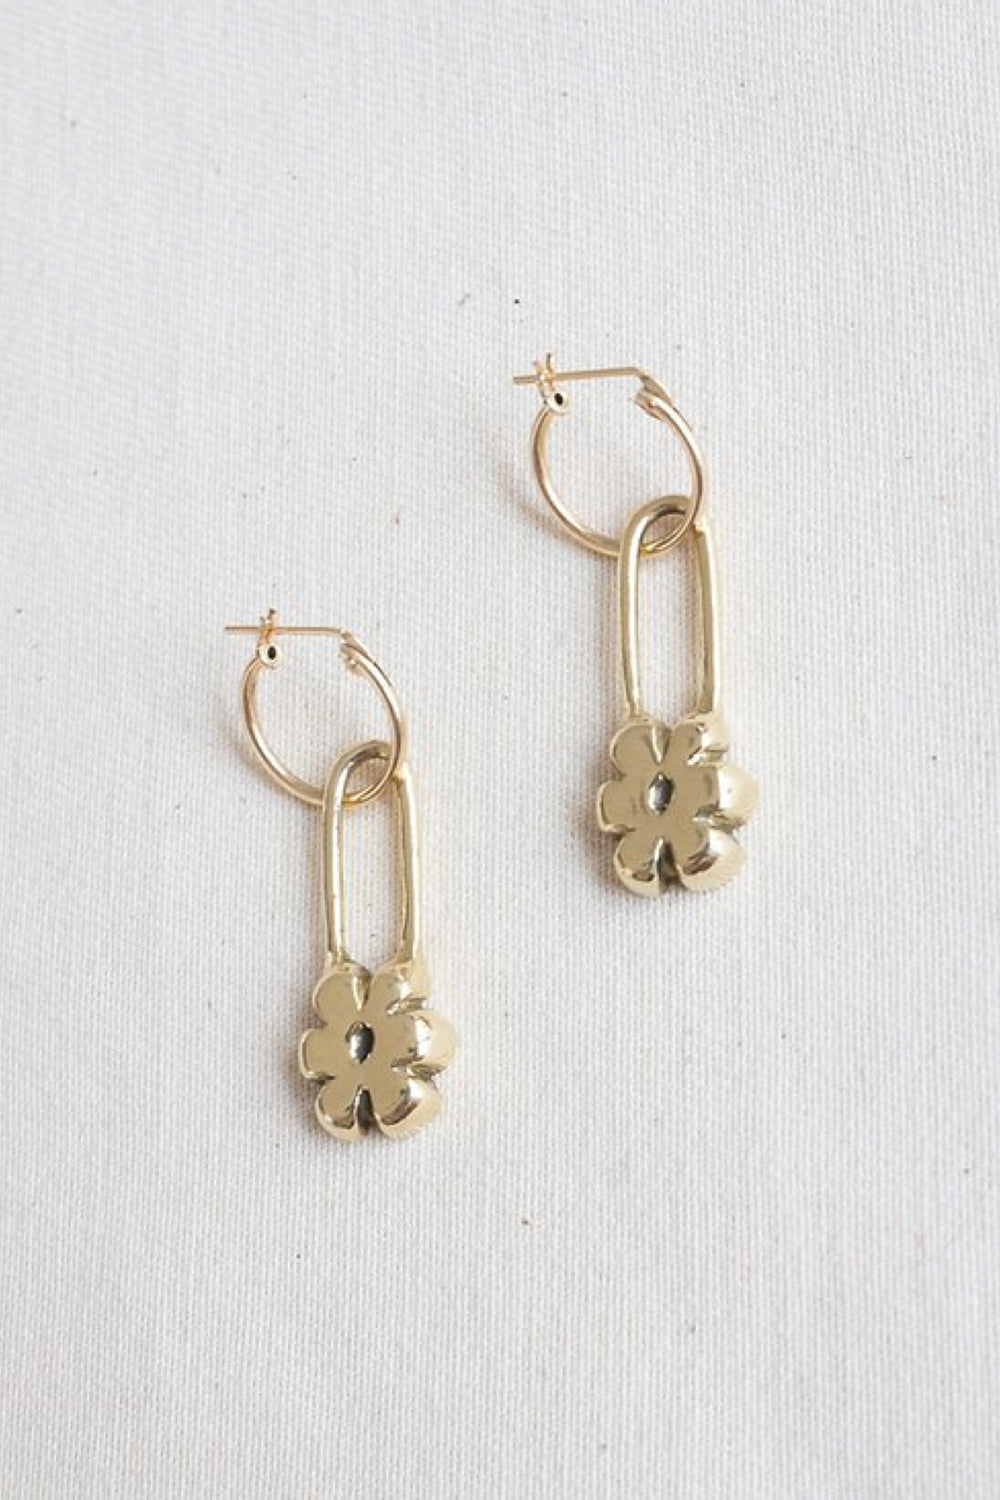 Gold Flower Pin Earrings